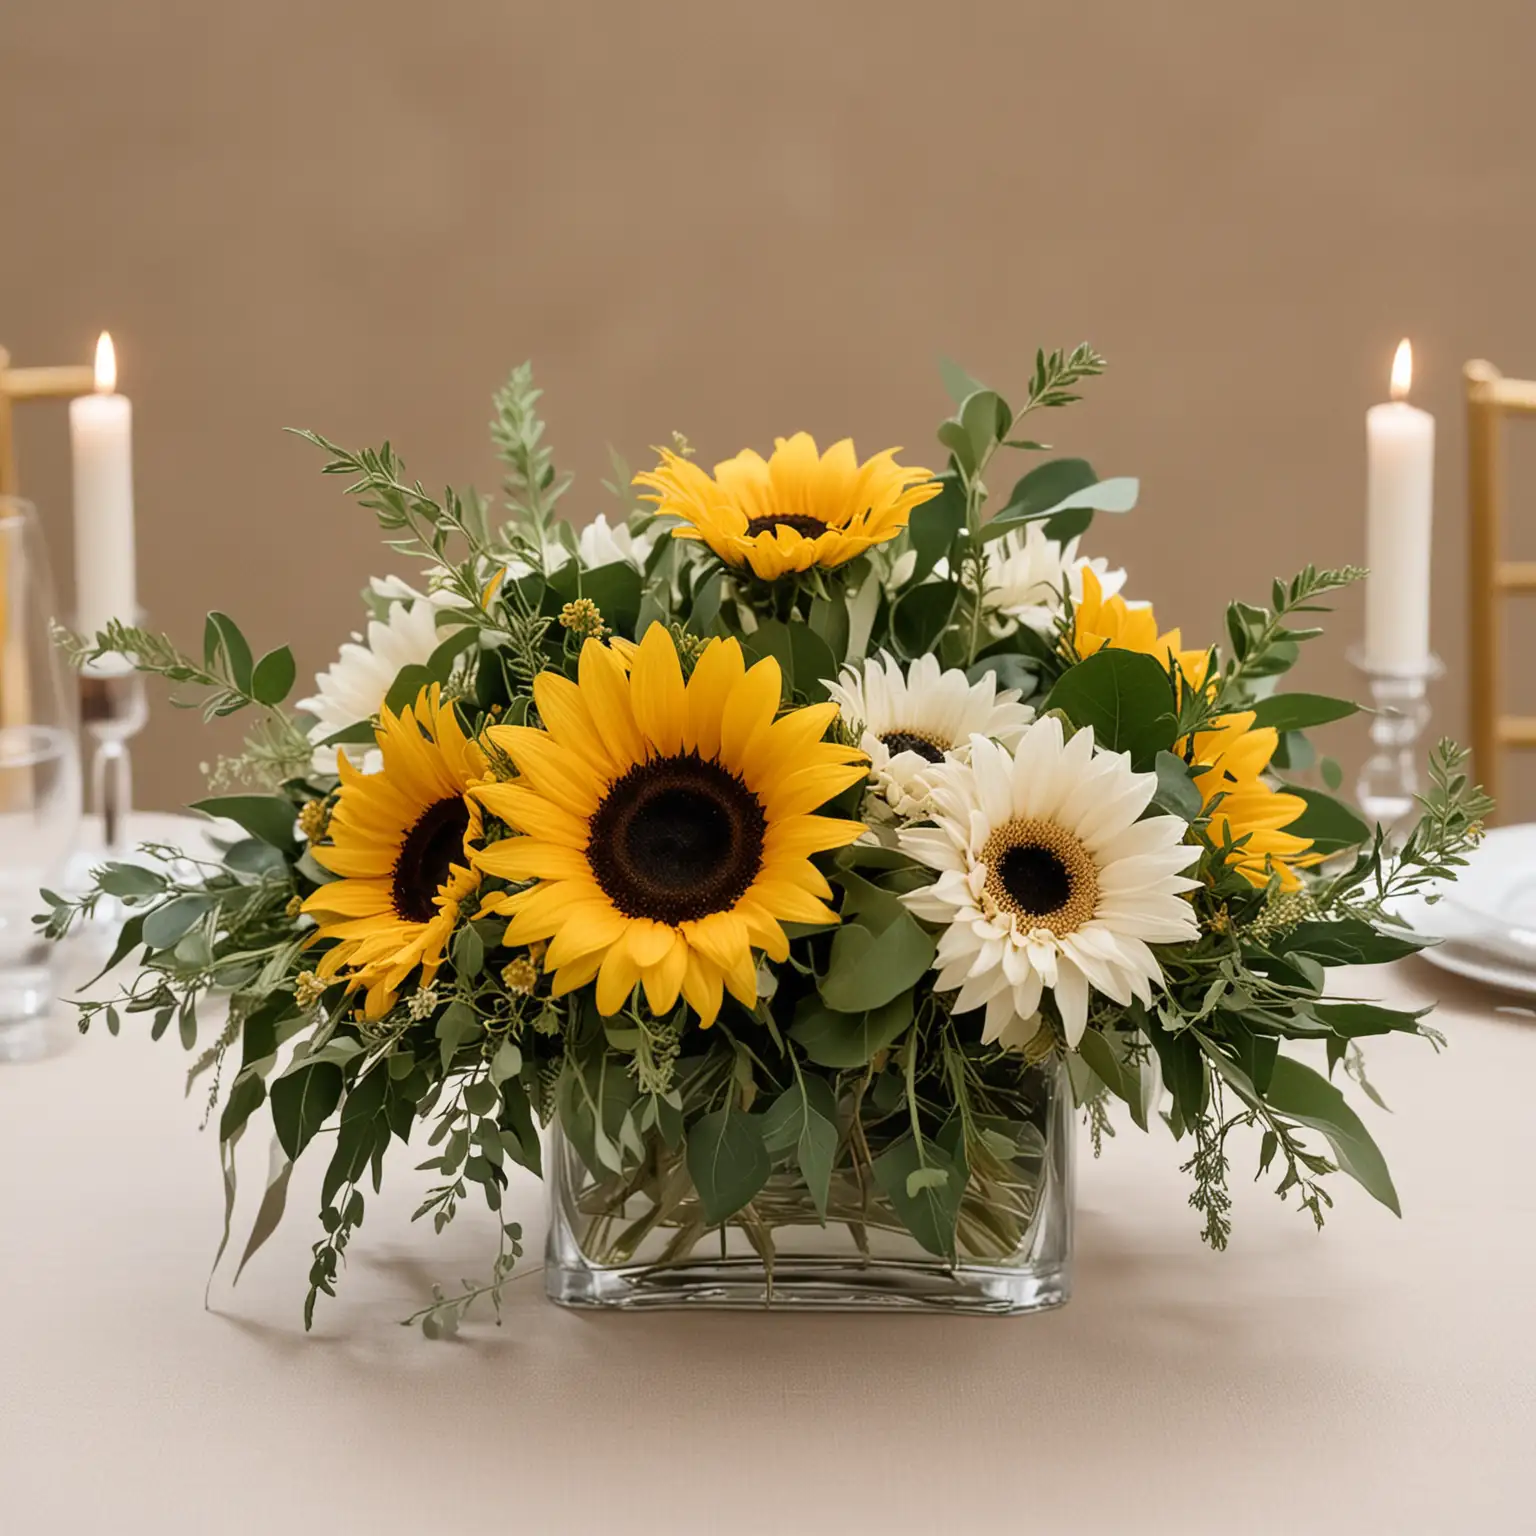 small elegant wedding centerpiece with sunflowers and elegant greenery